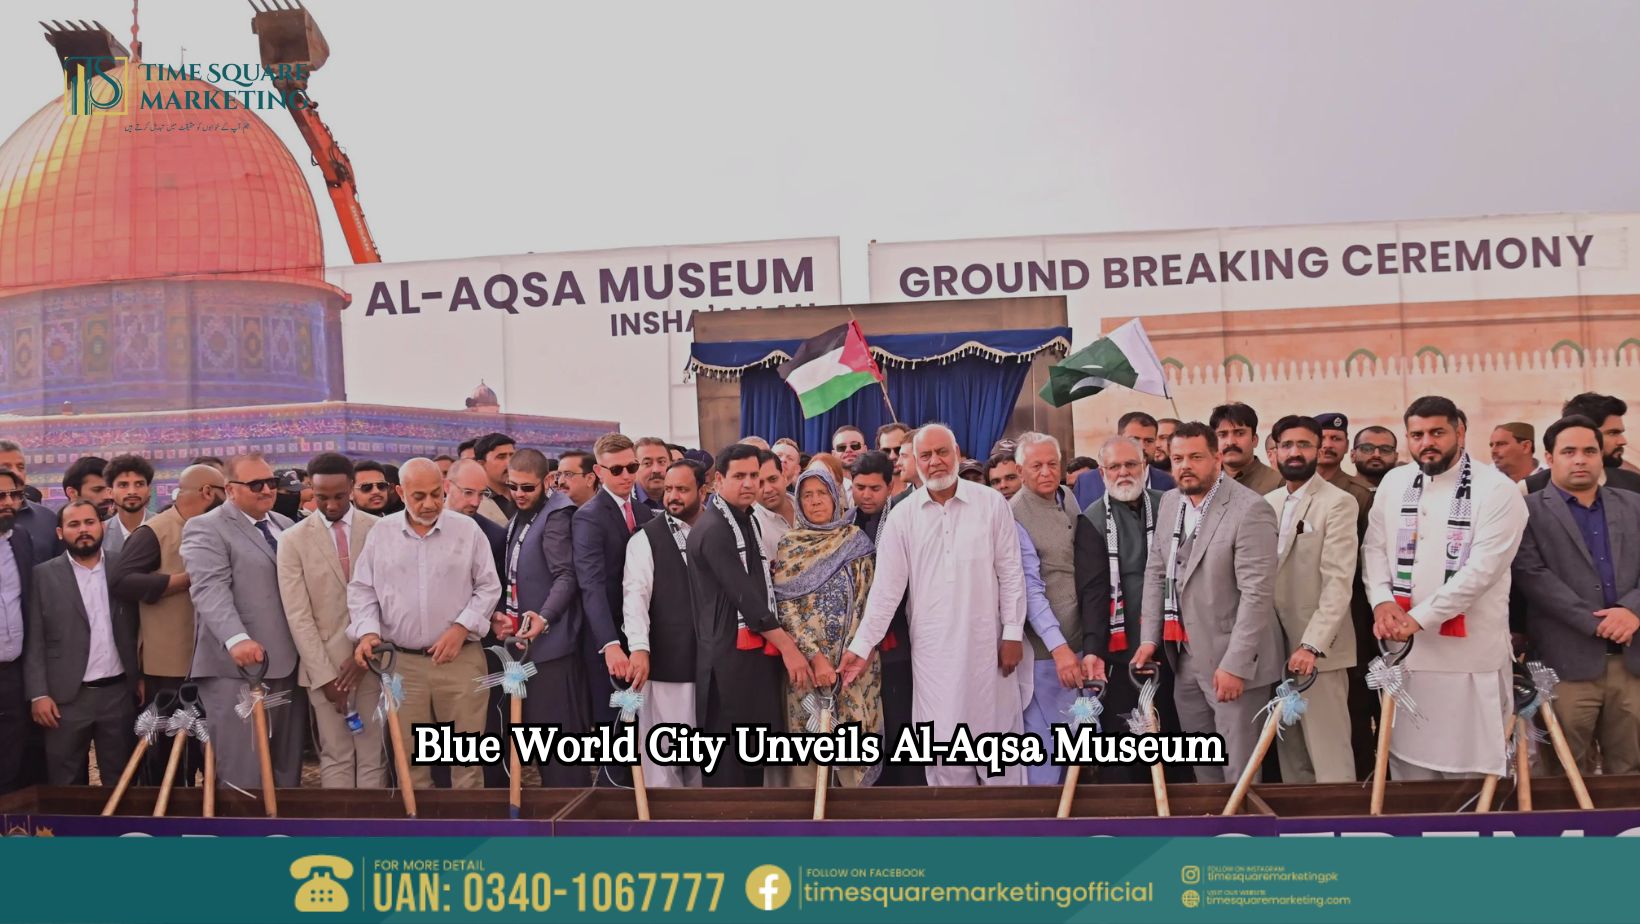 Blue World City Unveils Al-Aqsa Museum